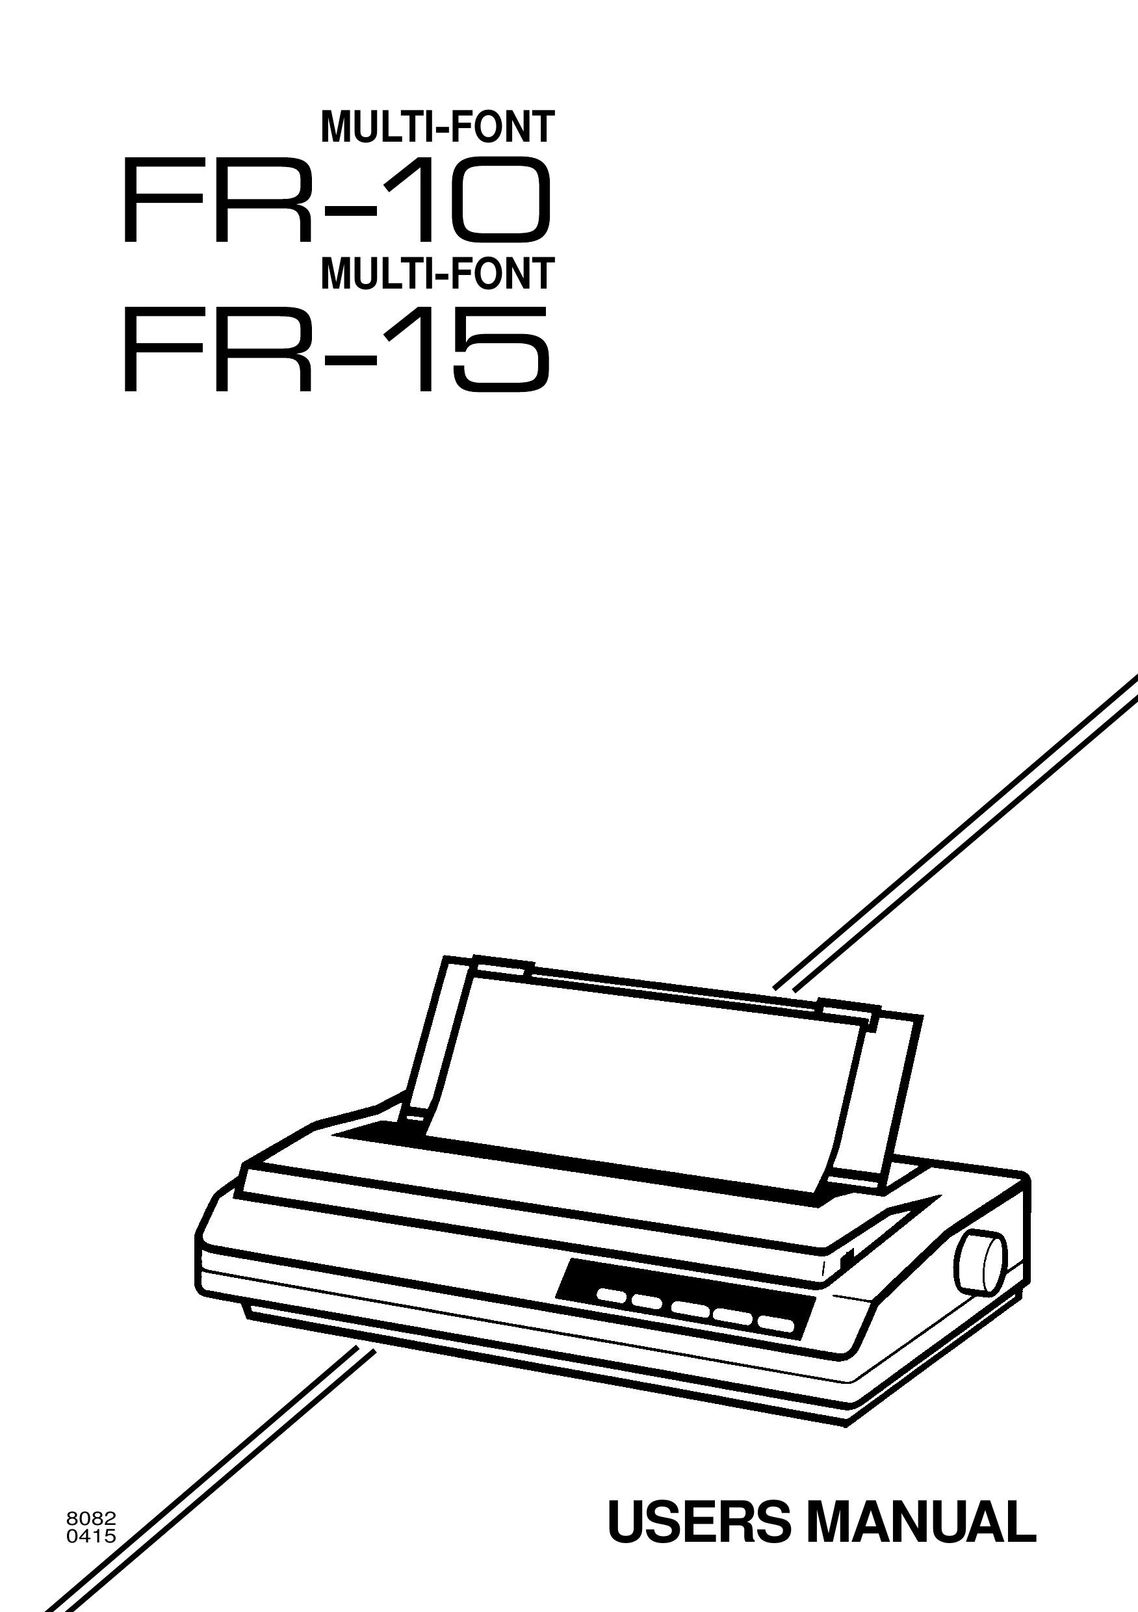 Star Micronics FR-10 Printer User Manual